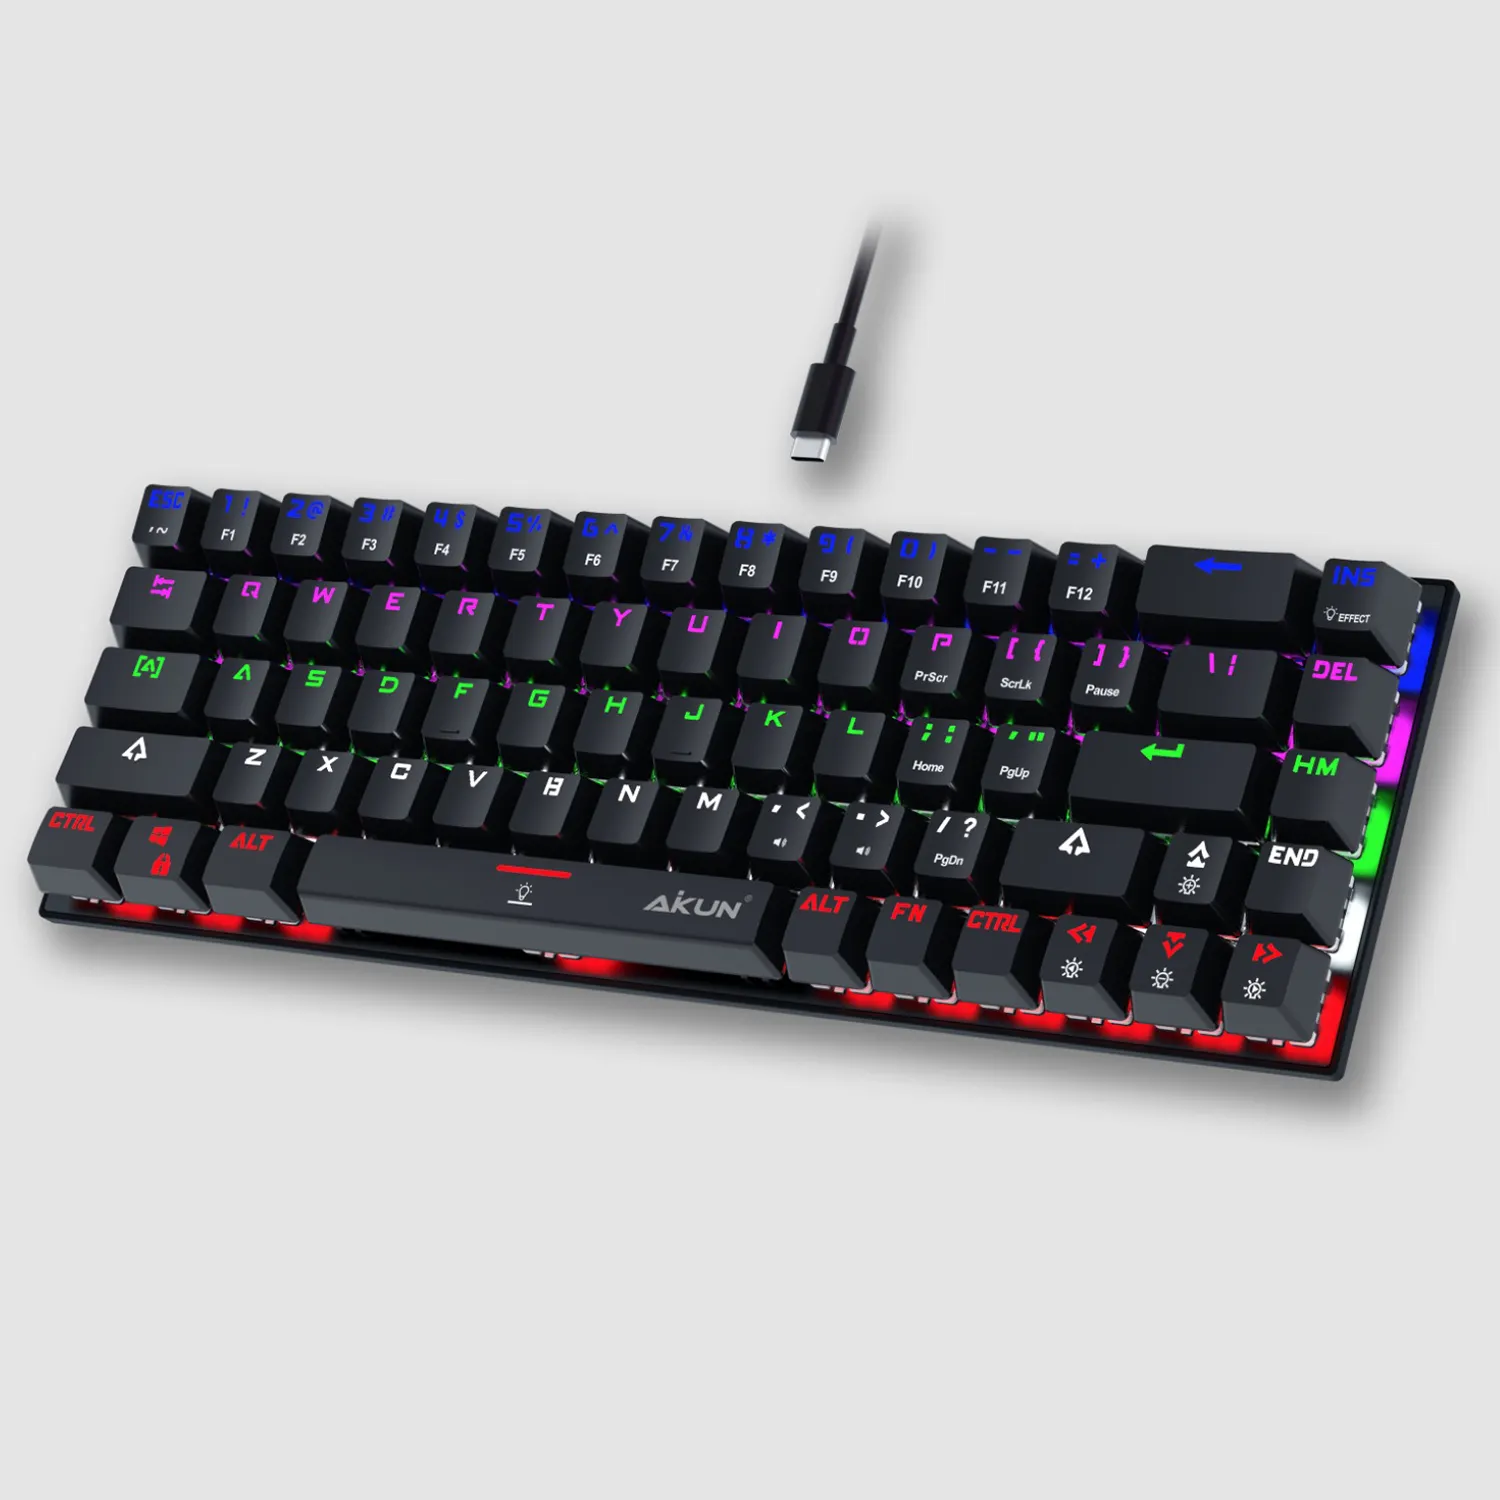 AIKUN GX9680 Wired RGB Backlight Gaming Keyboard Mechanical Switches Multimedia 61 Key Mini Portable Keyboards